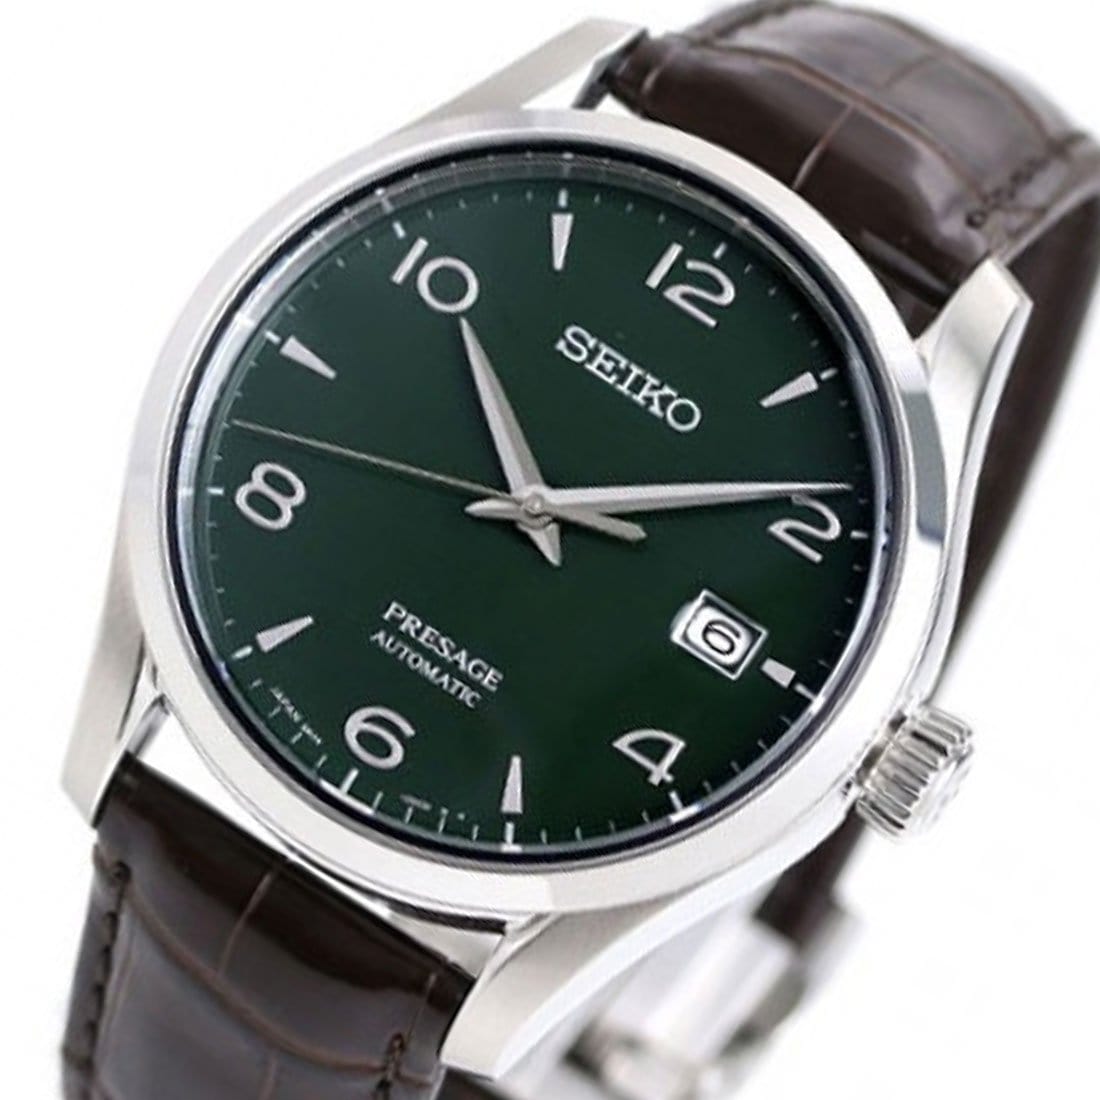 SARX063 Seiko Presage JDM Green Enamel Limited Edition Watch (PRE-ORDER)